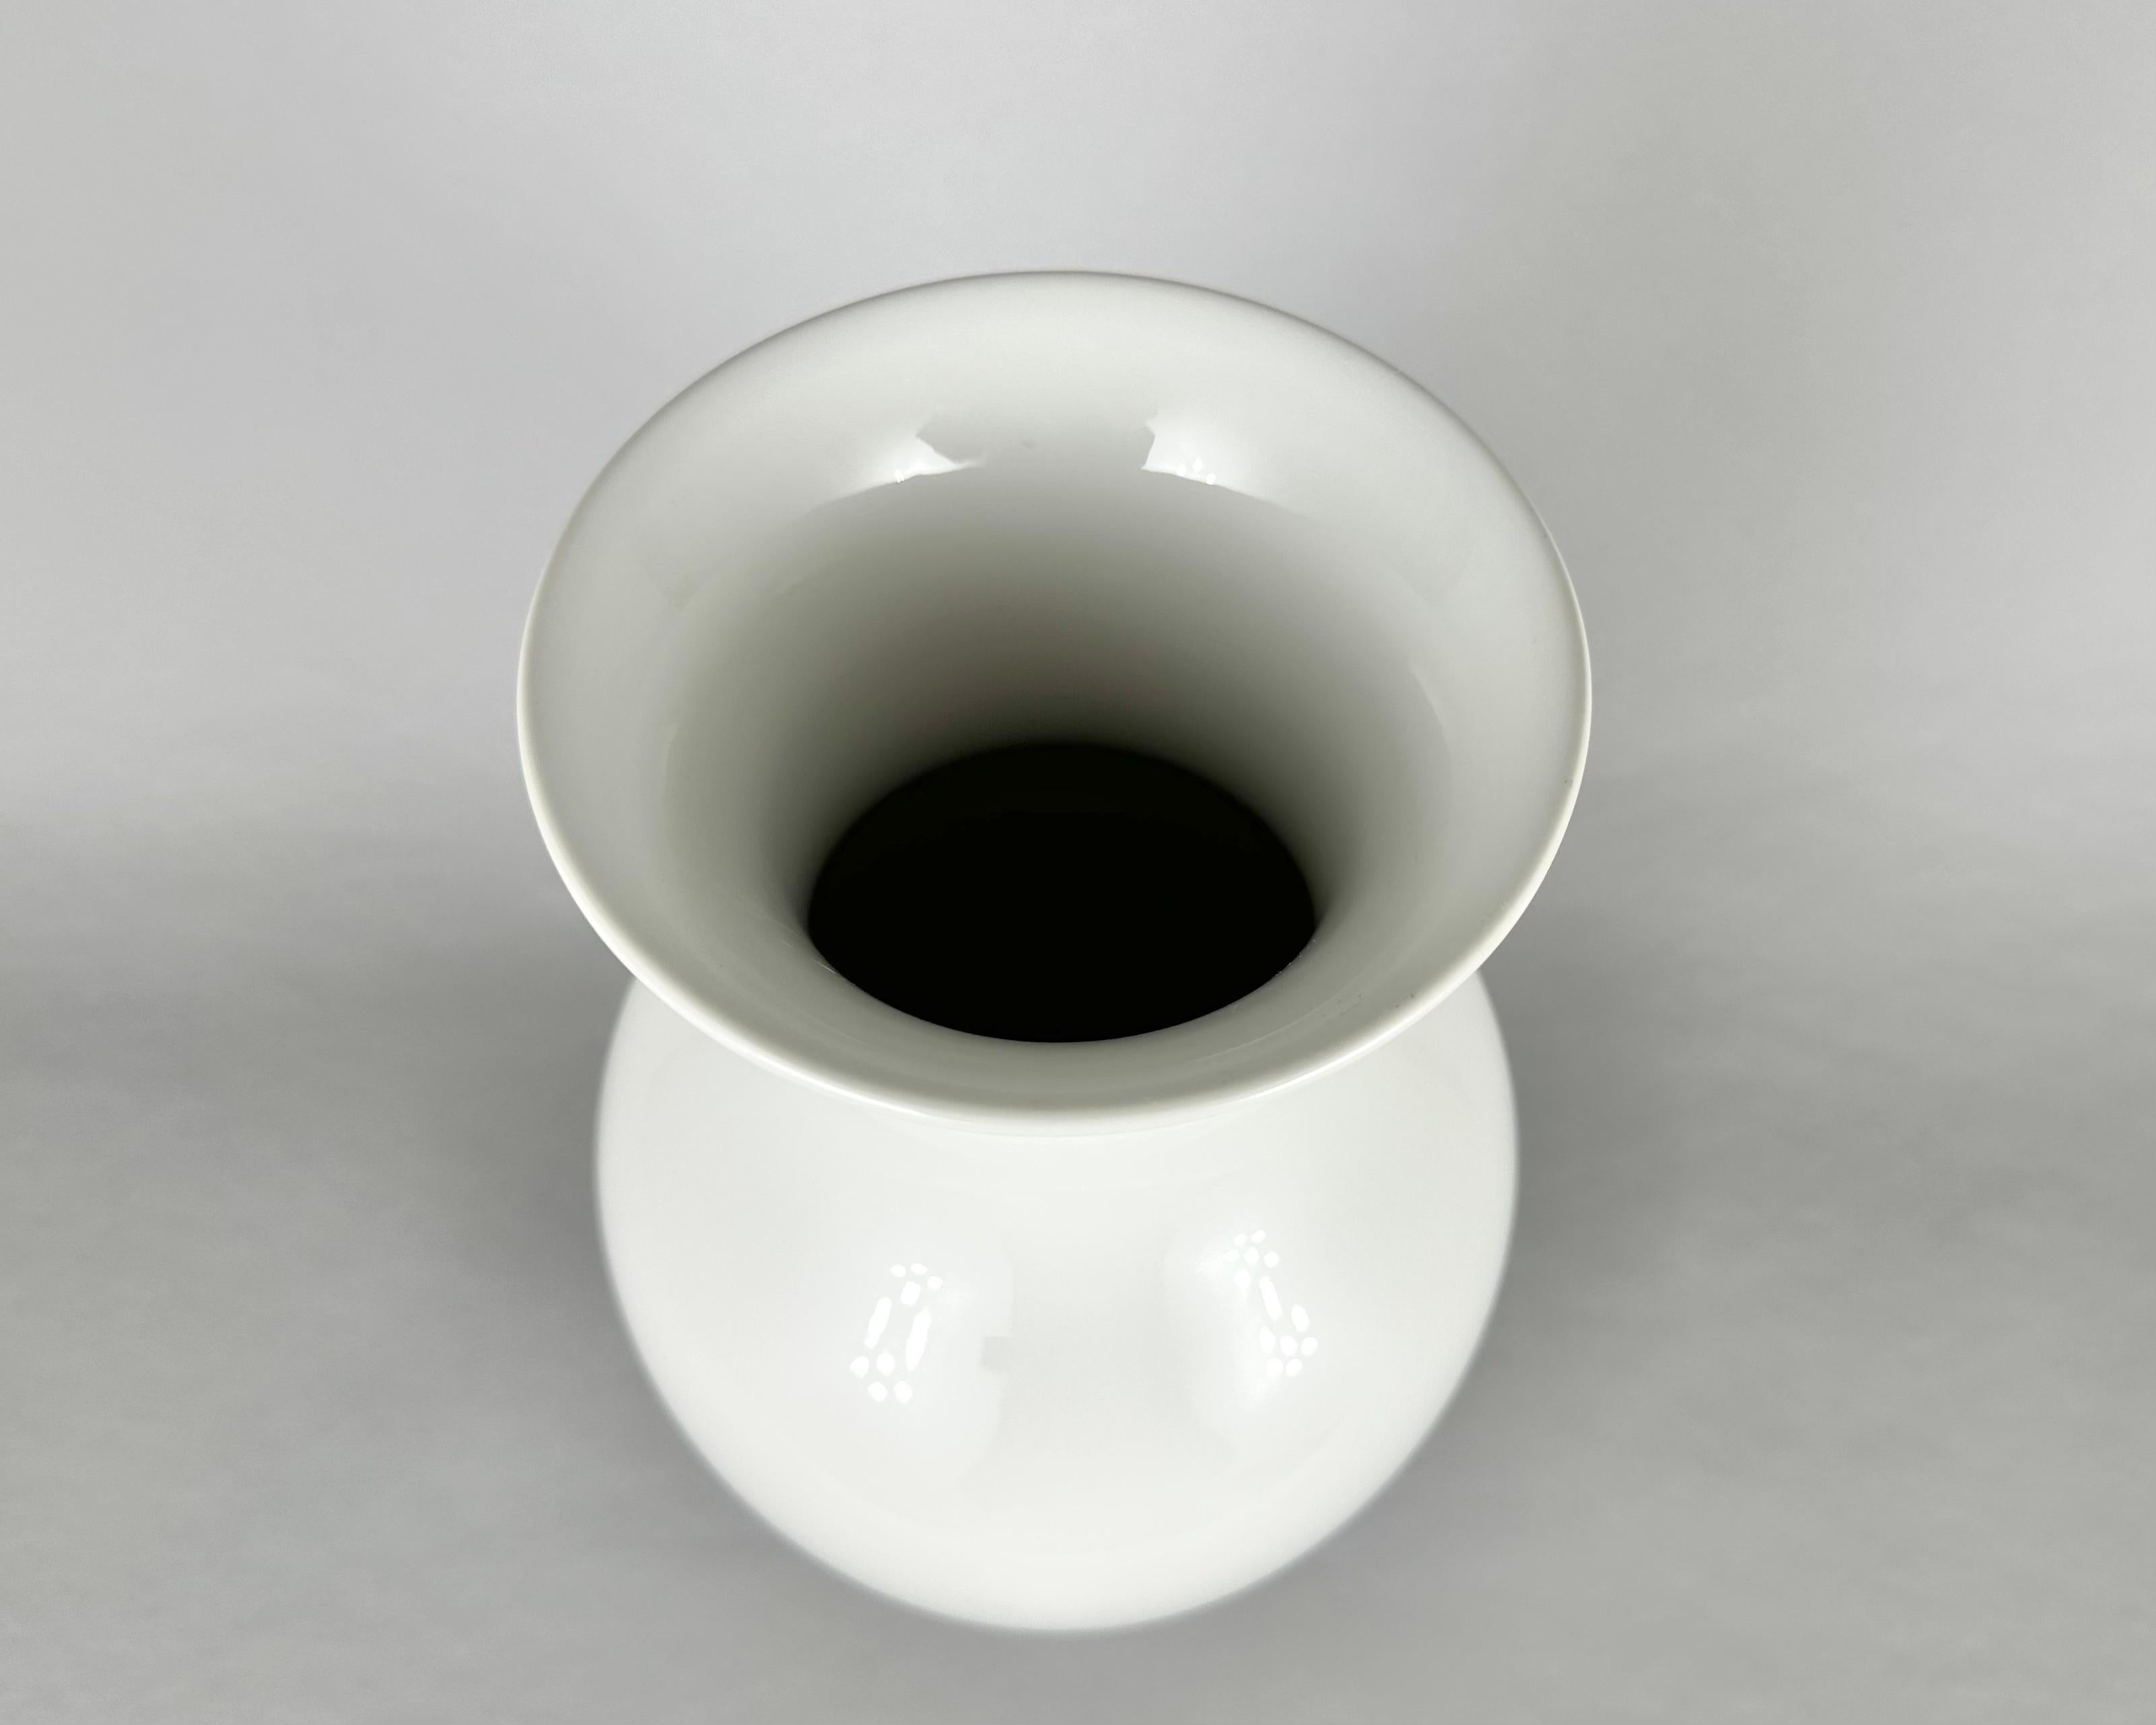 Royal Porcelain Bavaria KPM Handmade Vase Germany 1930s For Sale 1